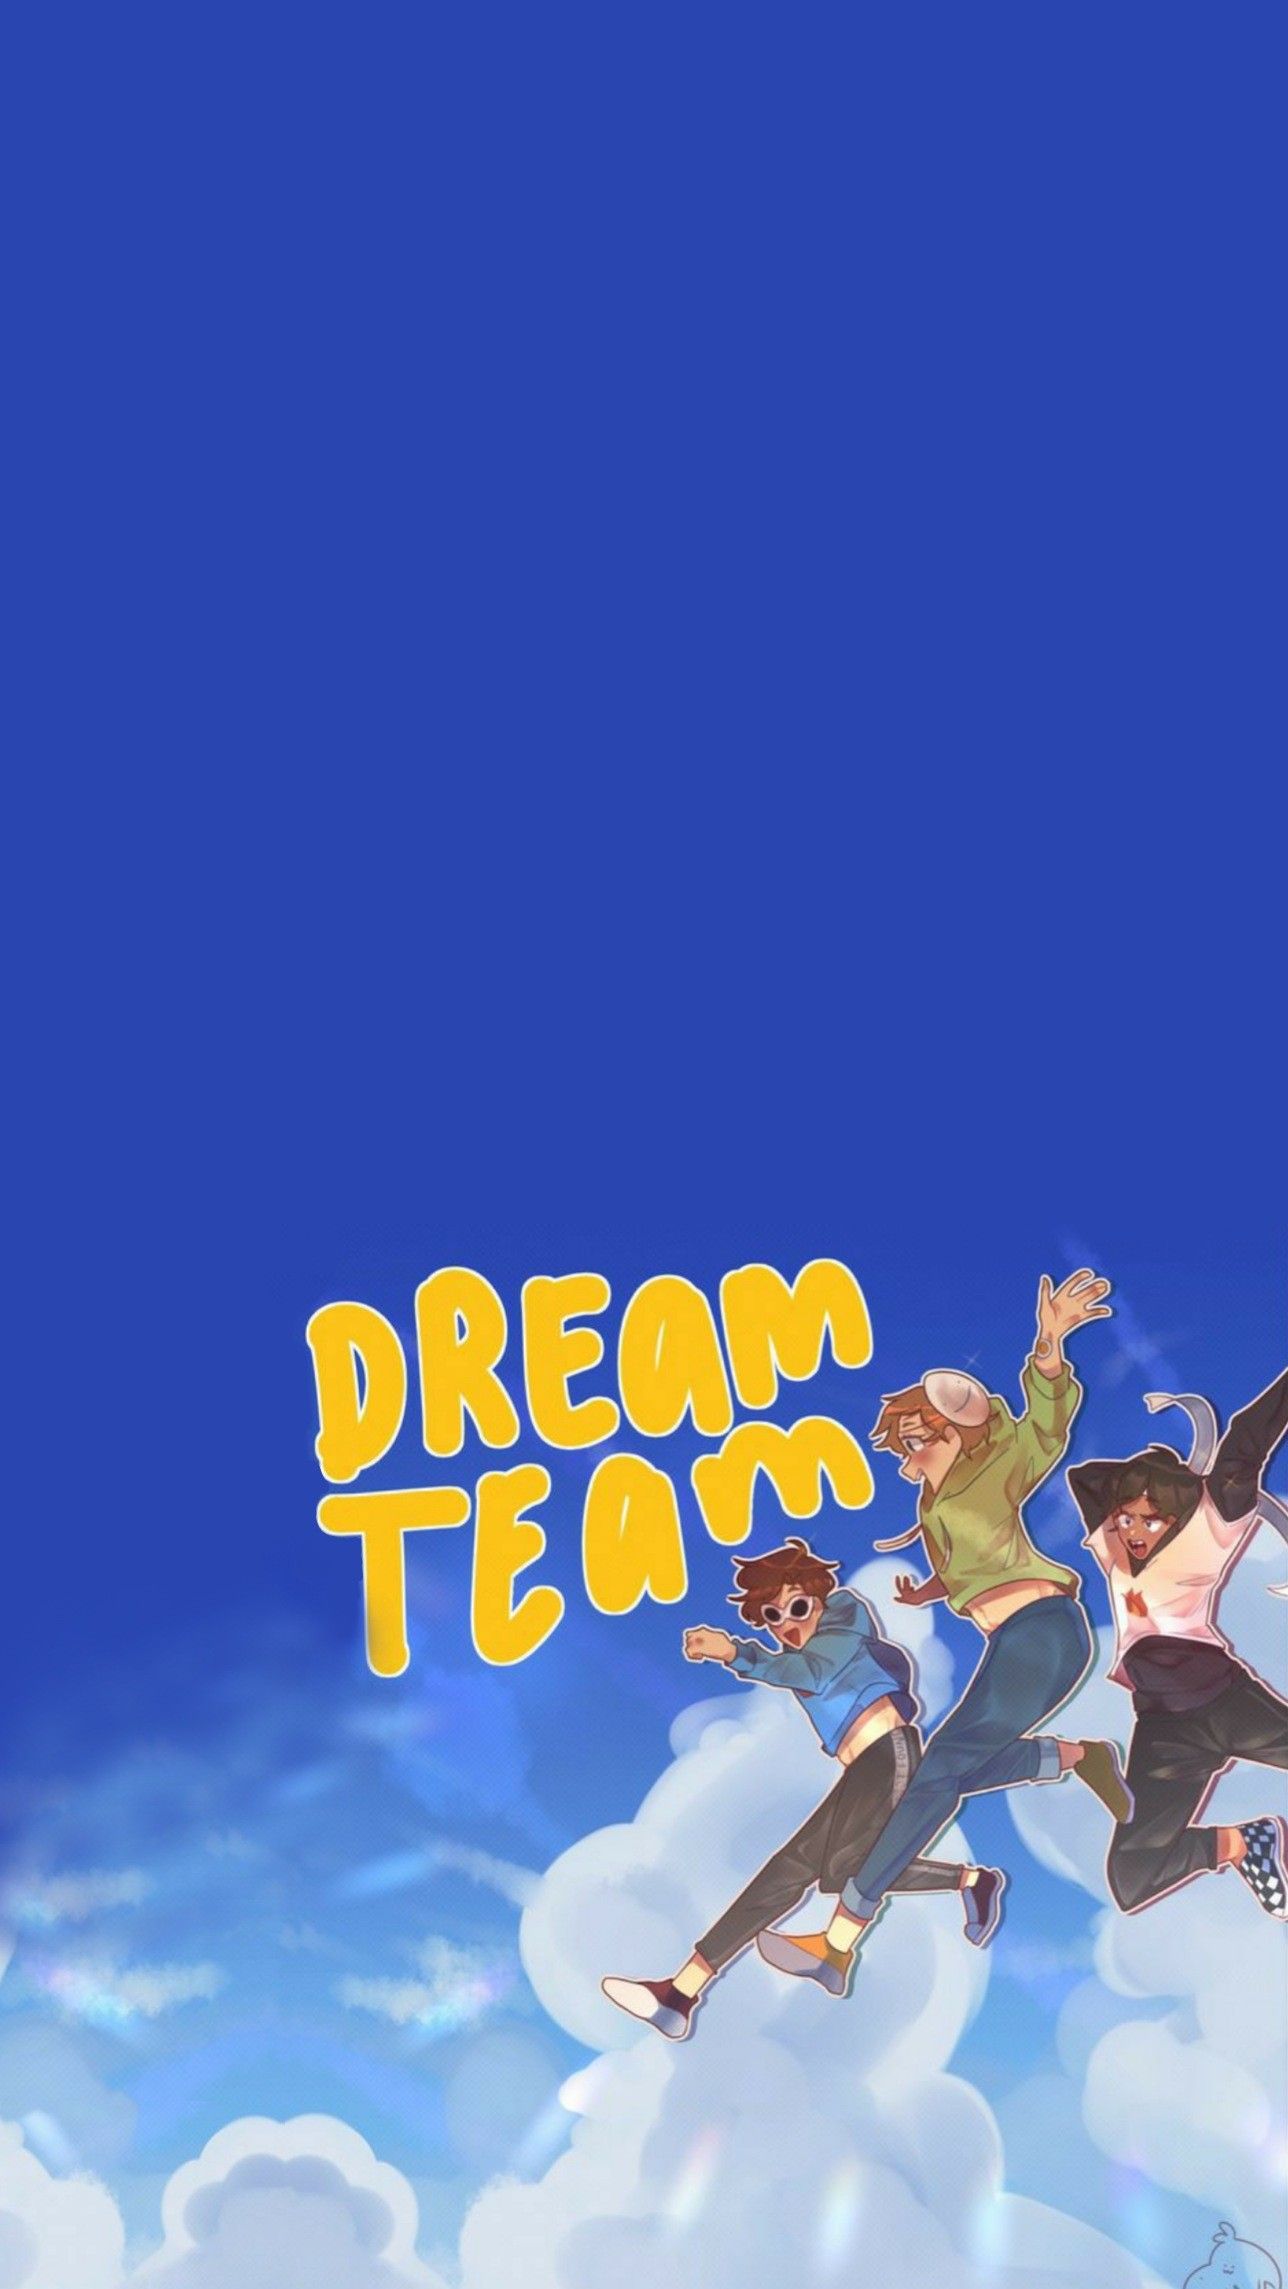 dream team wallpaper. Team wallpaper, Dream anime, My dream team